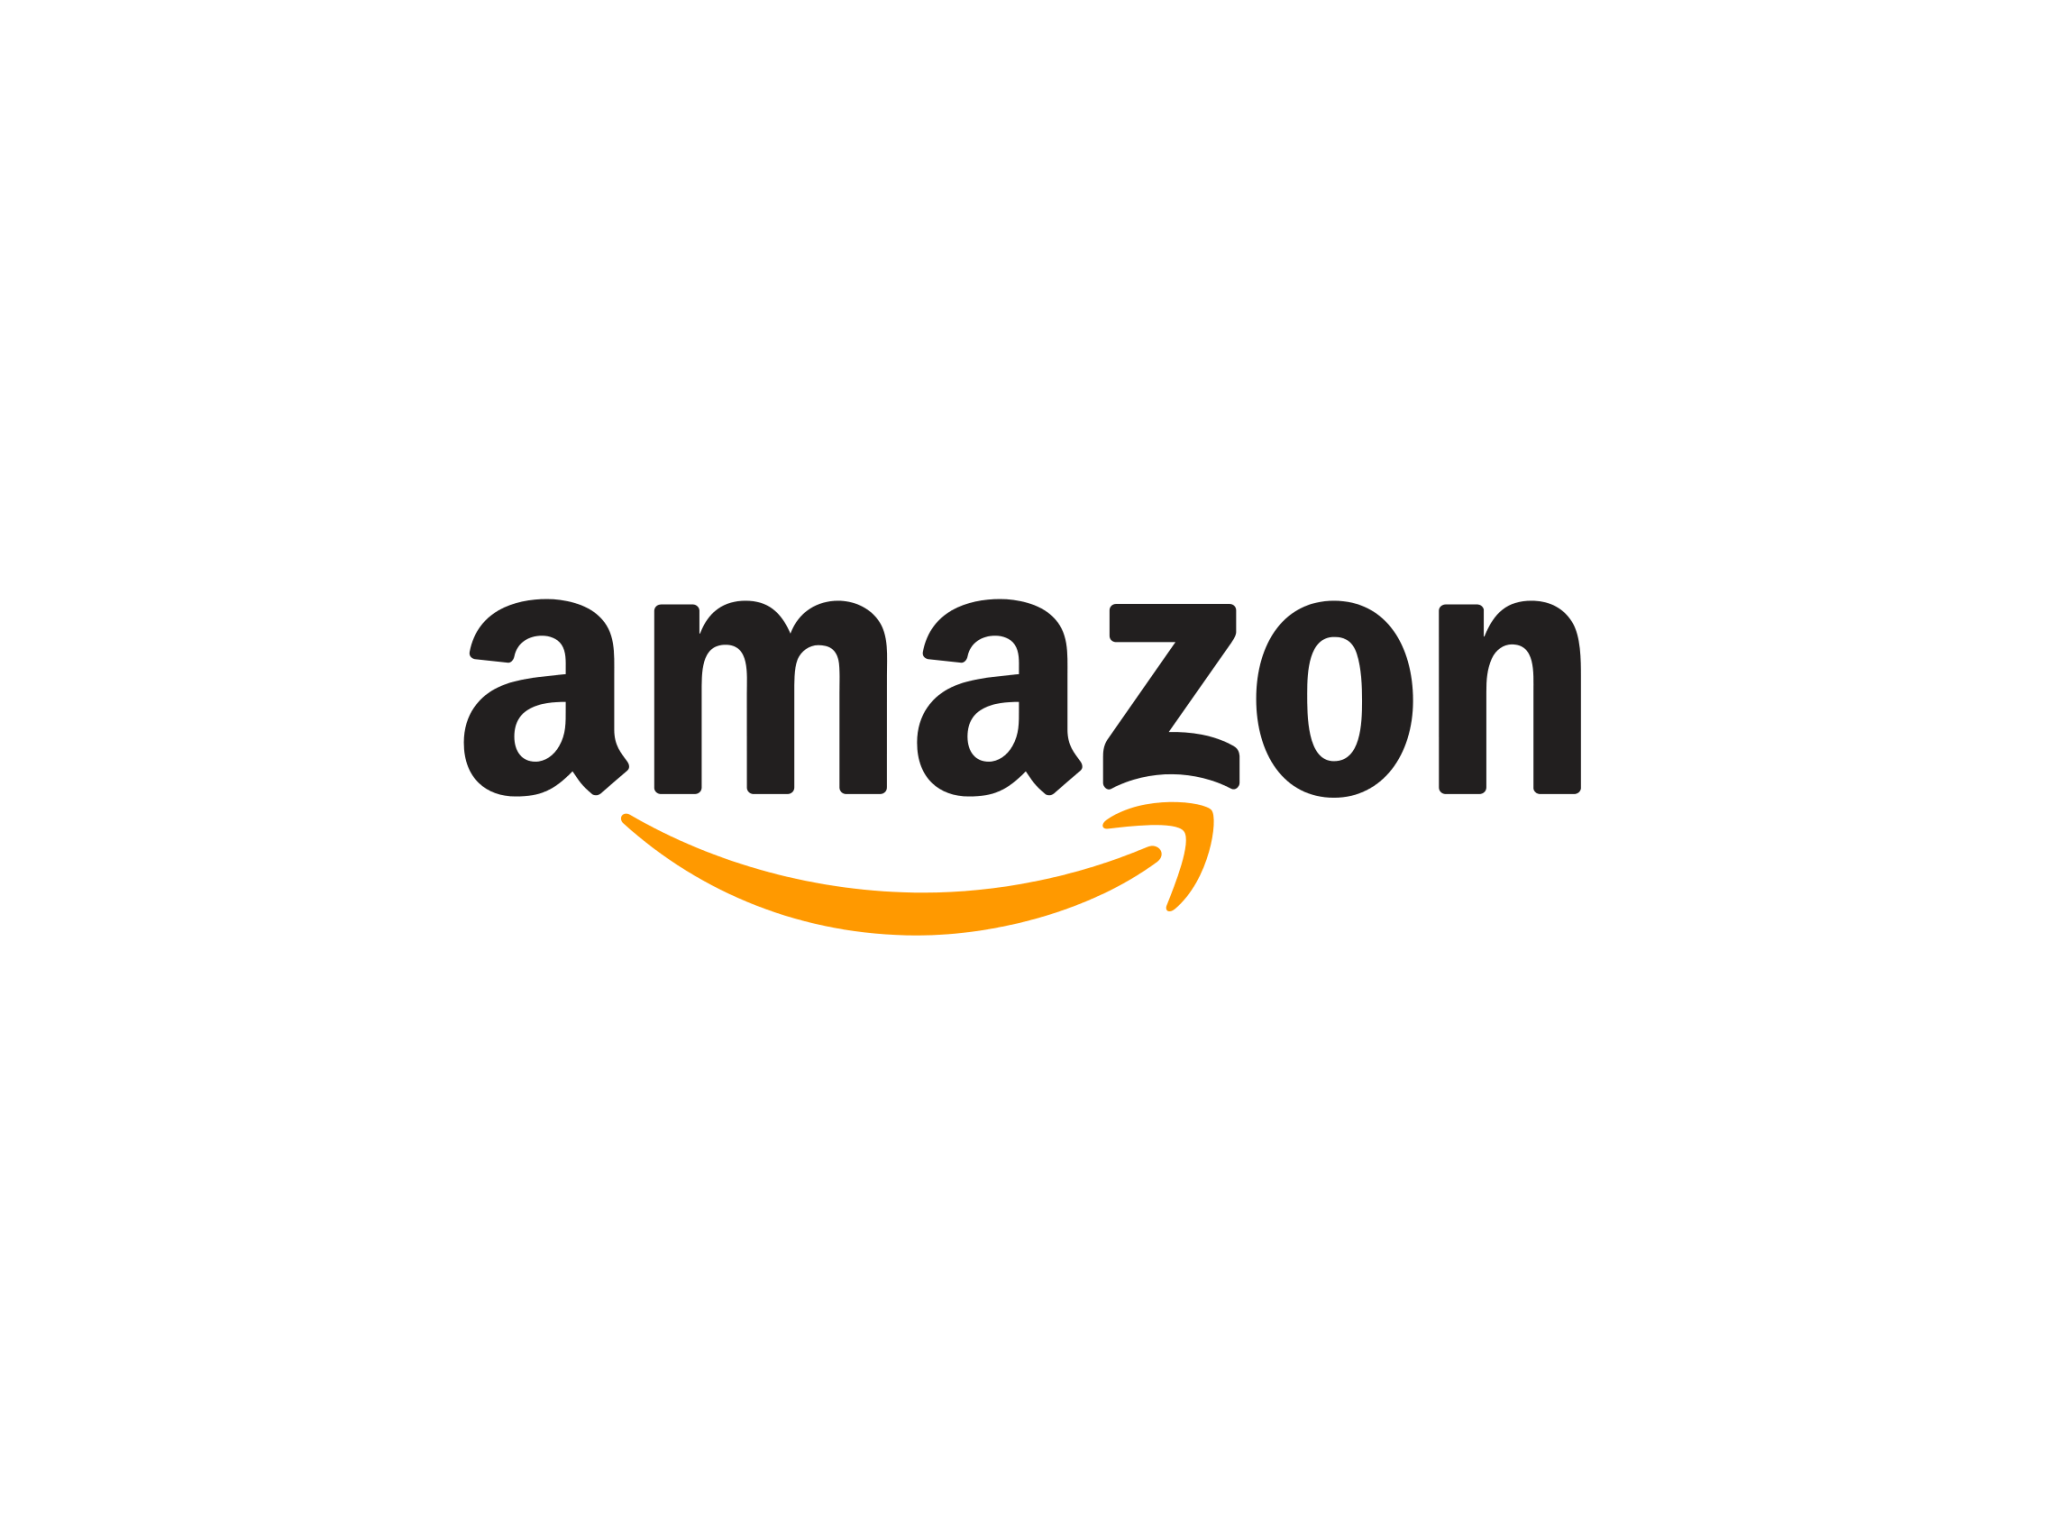 Amozan Logo - Amazon Logo PNG Image - PurePNG | Free transparent CC0 PNG Image Library